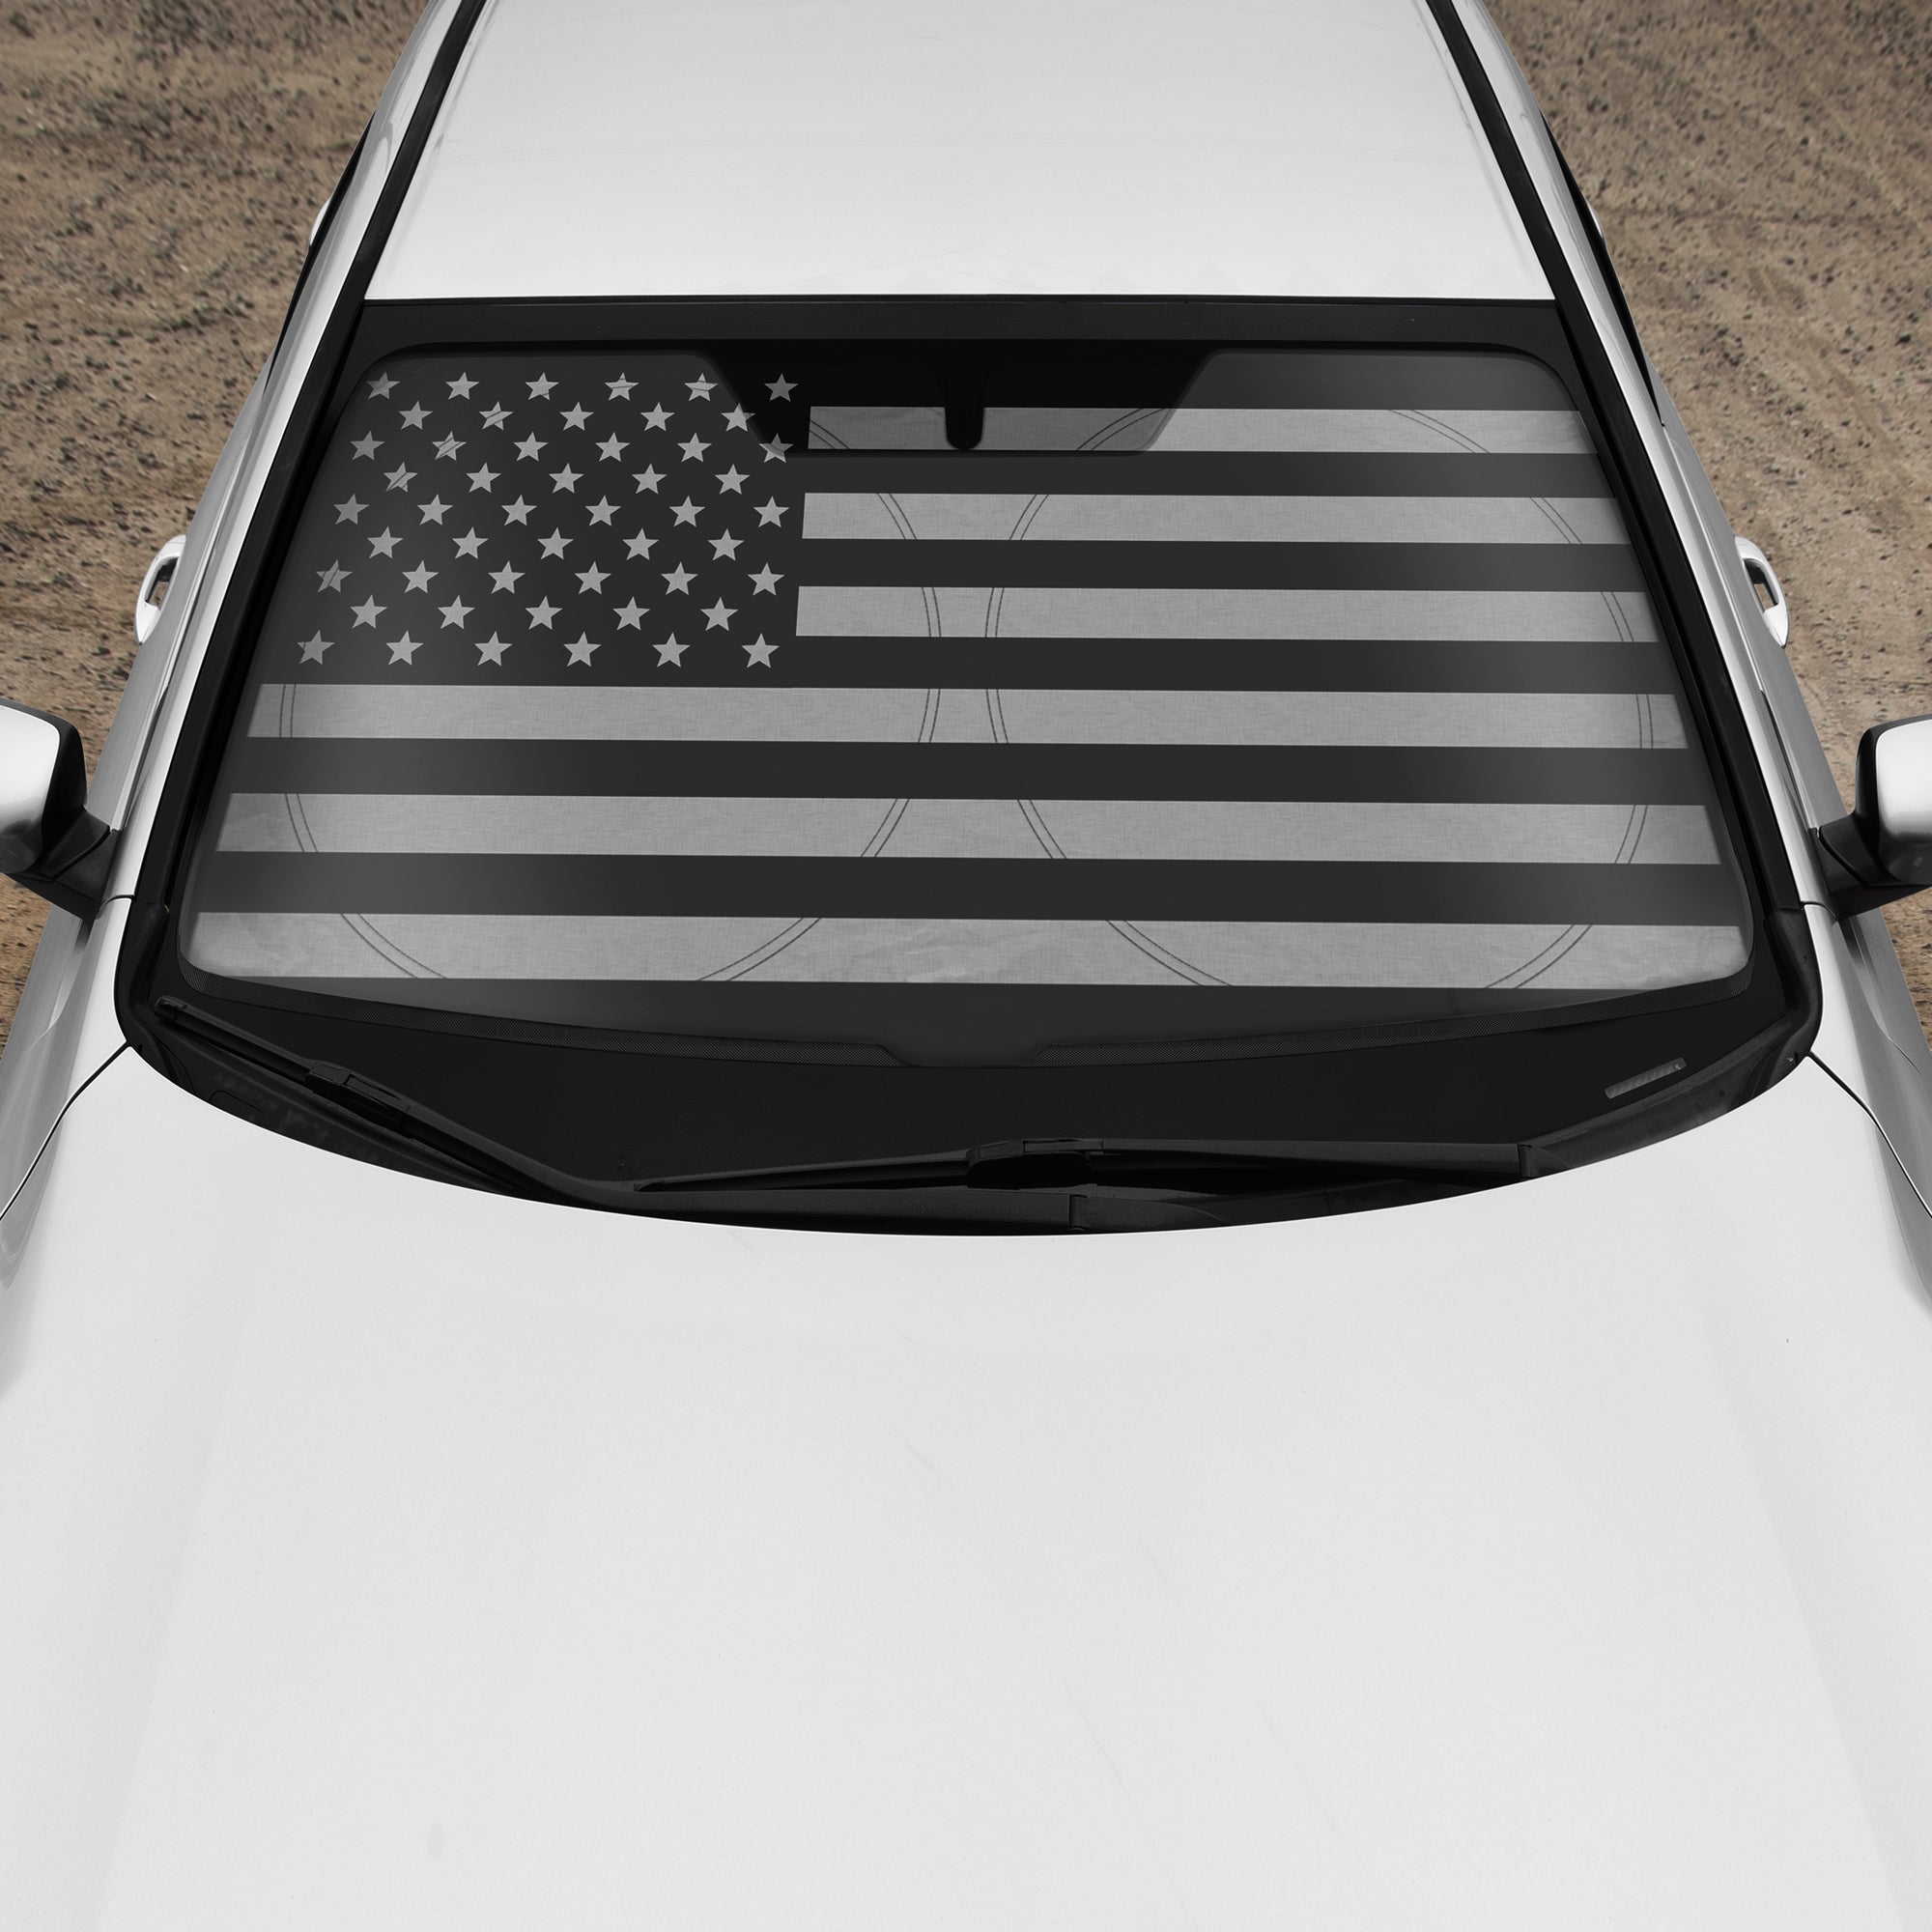 BDK USA American Black Flag Car Window Sun Shade Auto Shade for Windshield Visor, Block UV Reflect Heat to Keep Your Car SUV Truck Cool Jumbo 64"x32"